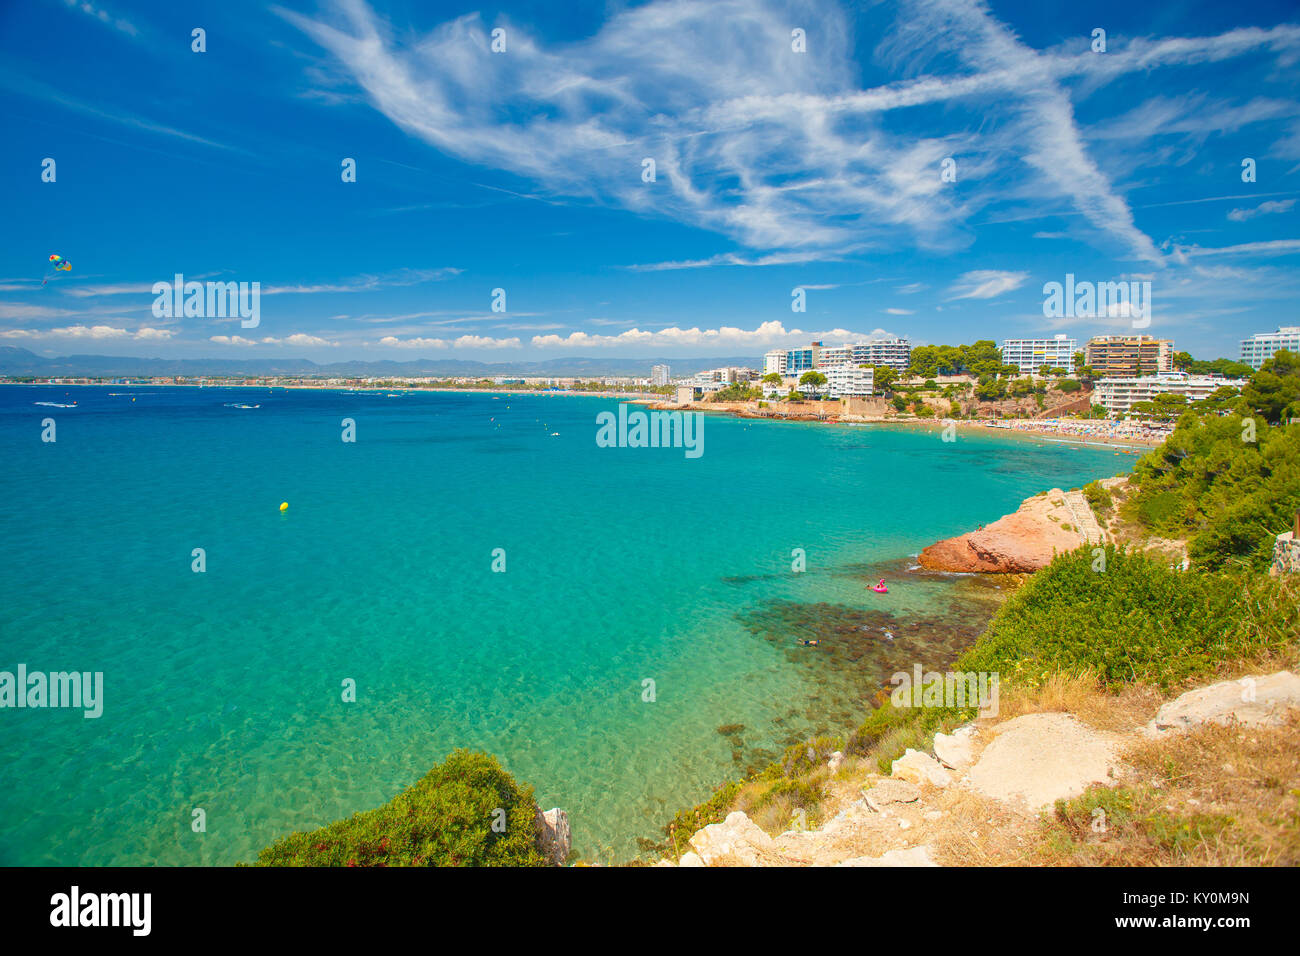 Clear sky over sea. Summer resort scenic landscape. Costa dorada spain resort. Stock Photo